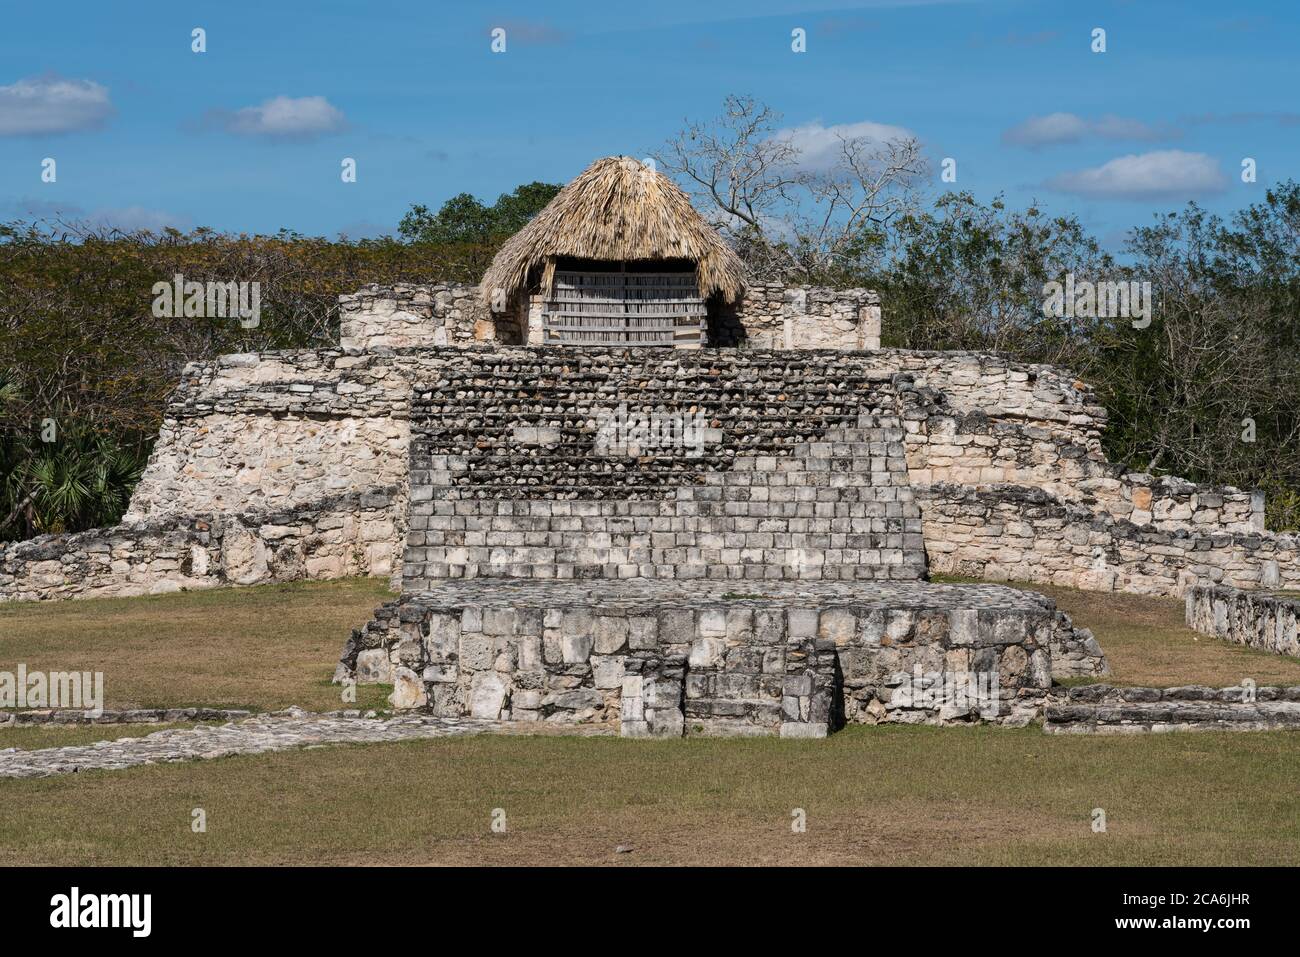 Der Tempel des Fischers oder Templo del Pescador in den Ruinen der post-klassischen Maya-Stadt Mayapan, Yucatan, Mexiko. Stockfoto